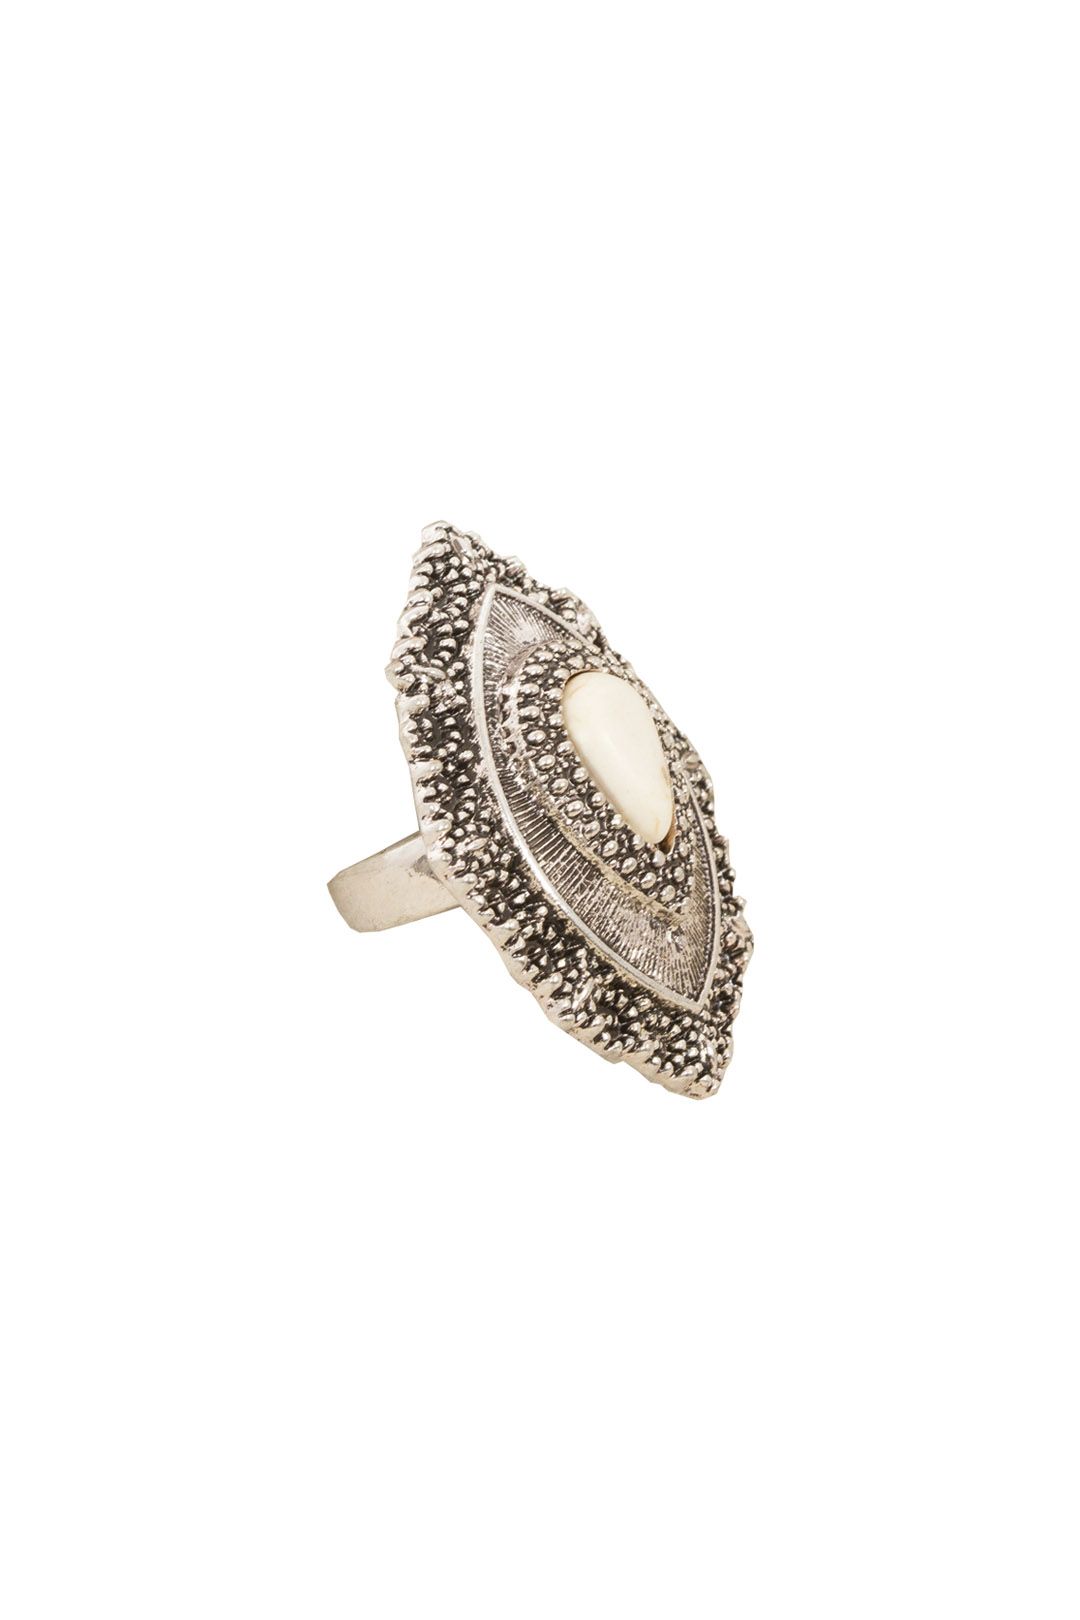 Adorne - Boho Stone Teardrop Ring - Natural Silver - Front